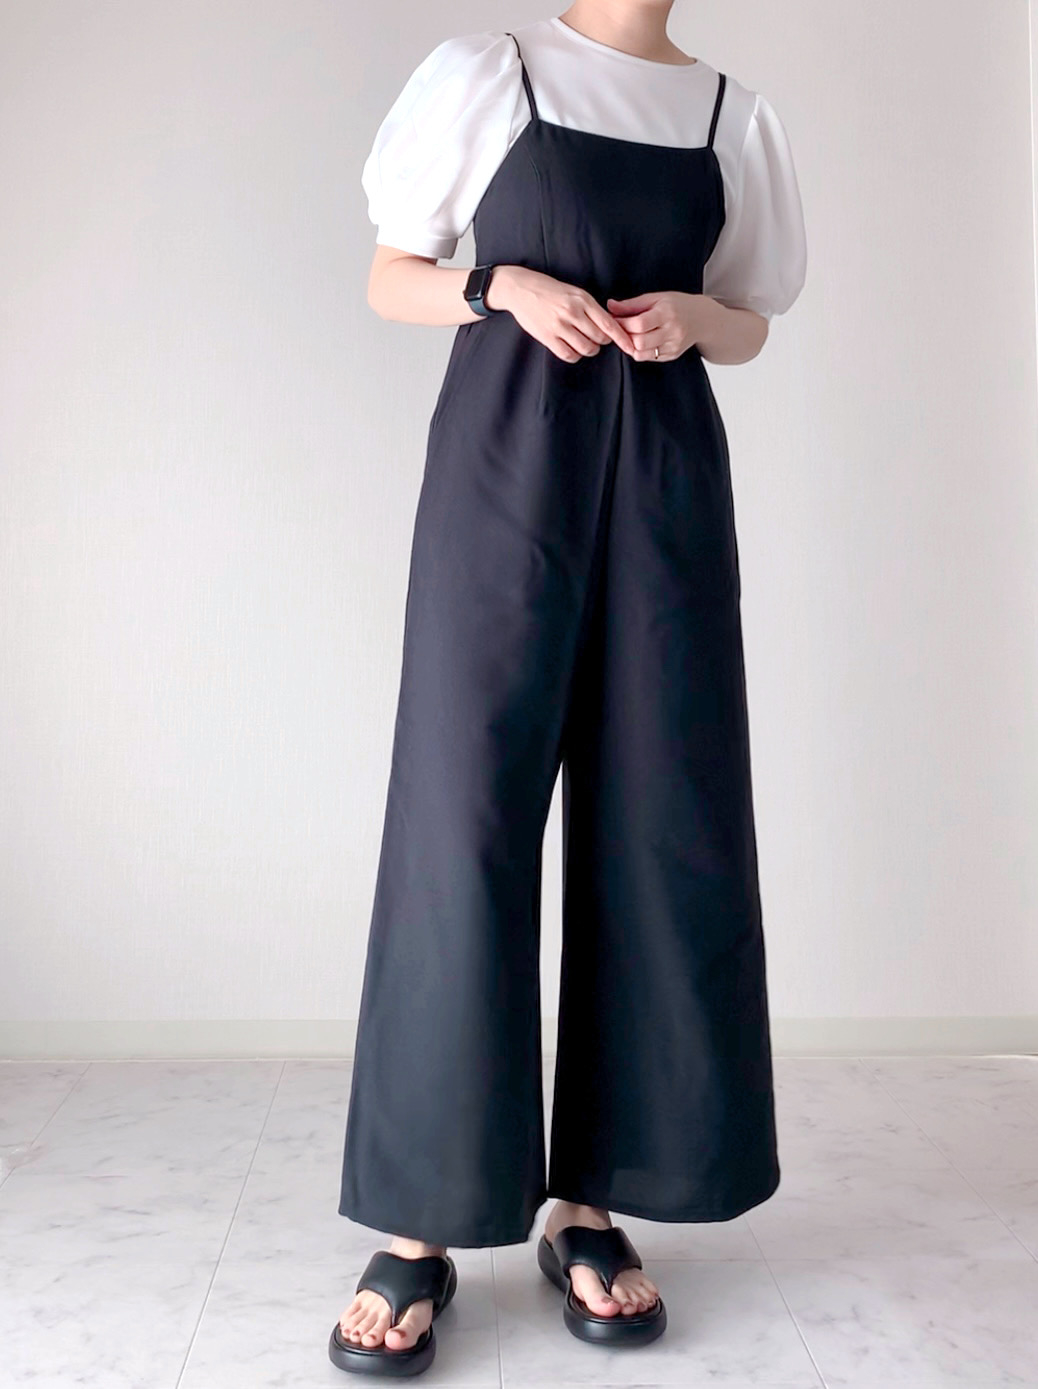 GU（ジーユー）のおすすめファッションアイテム「ボリュームスリーブT(5分袖)Z」